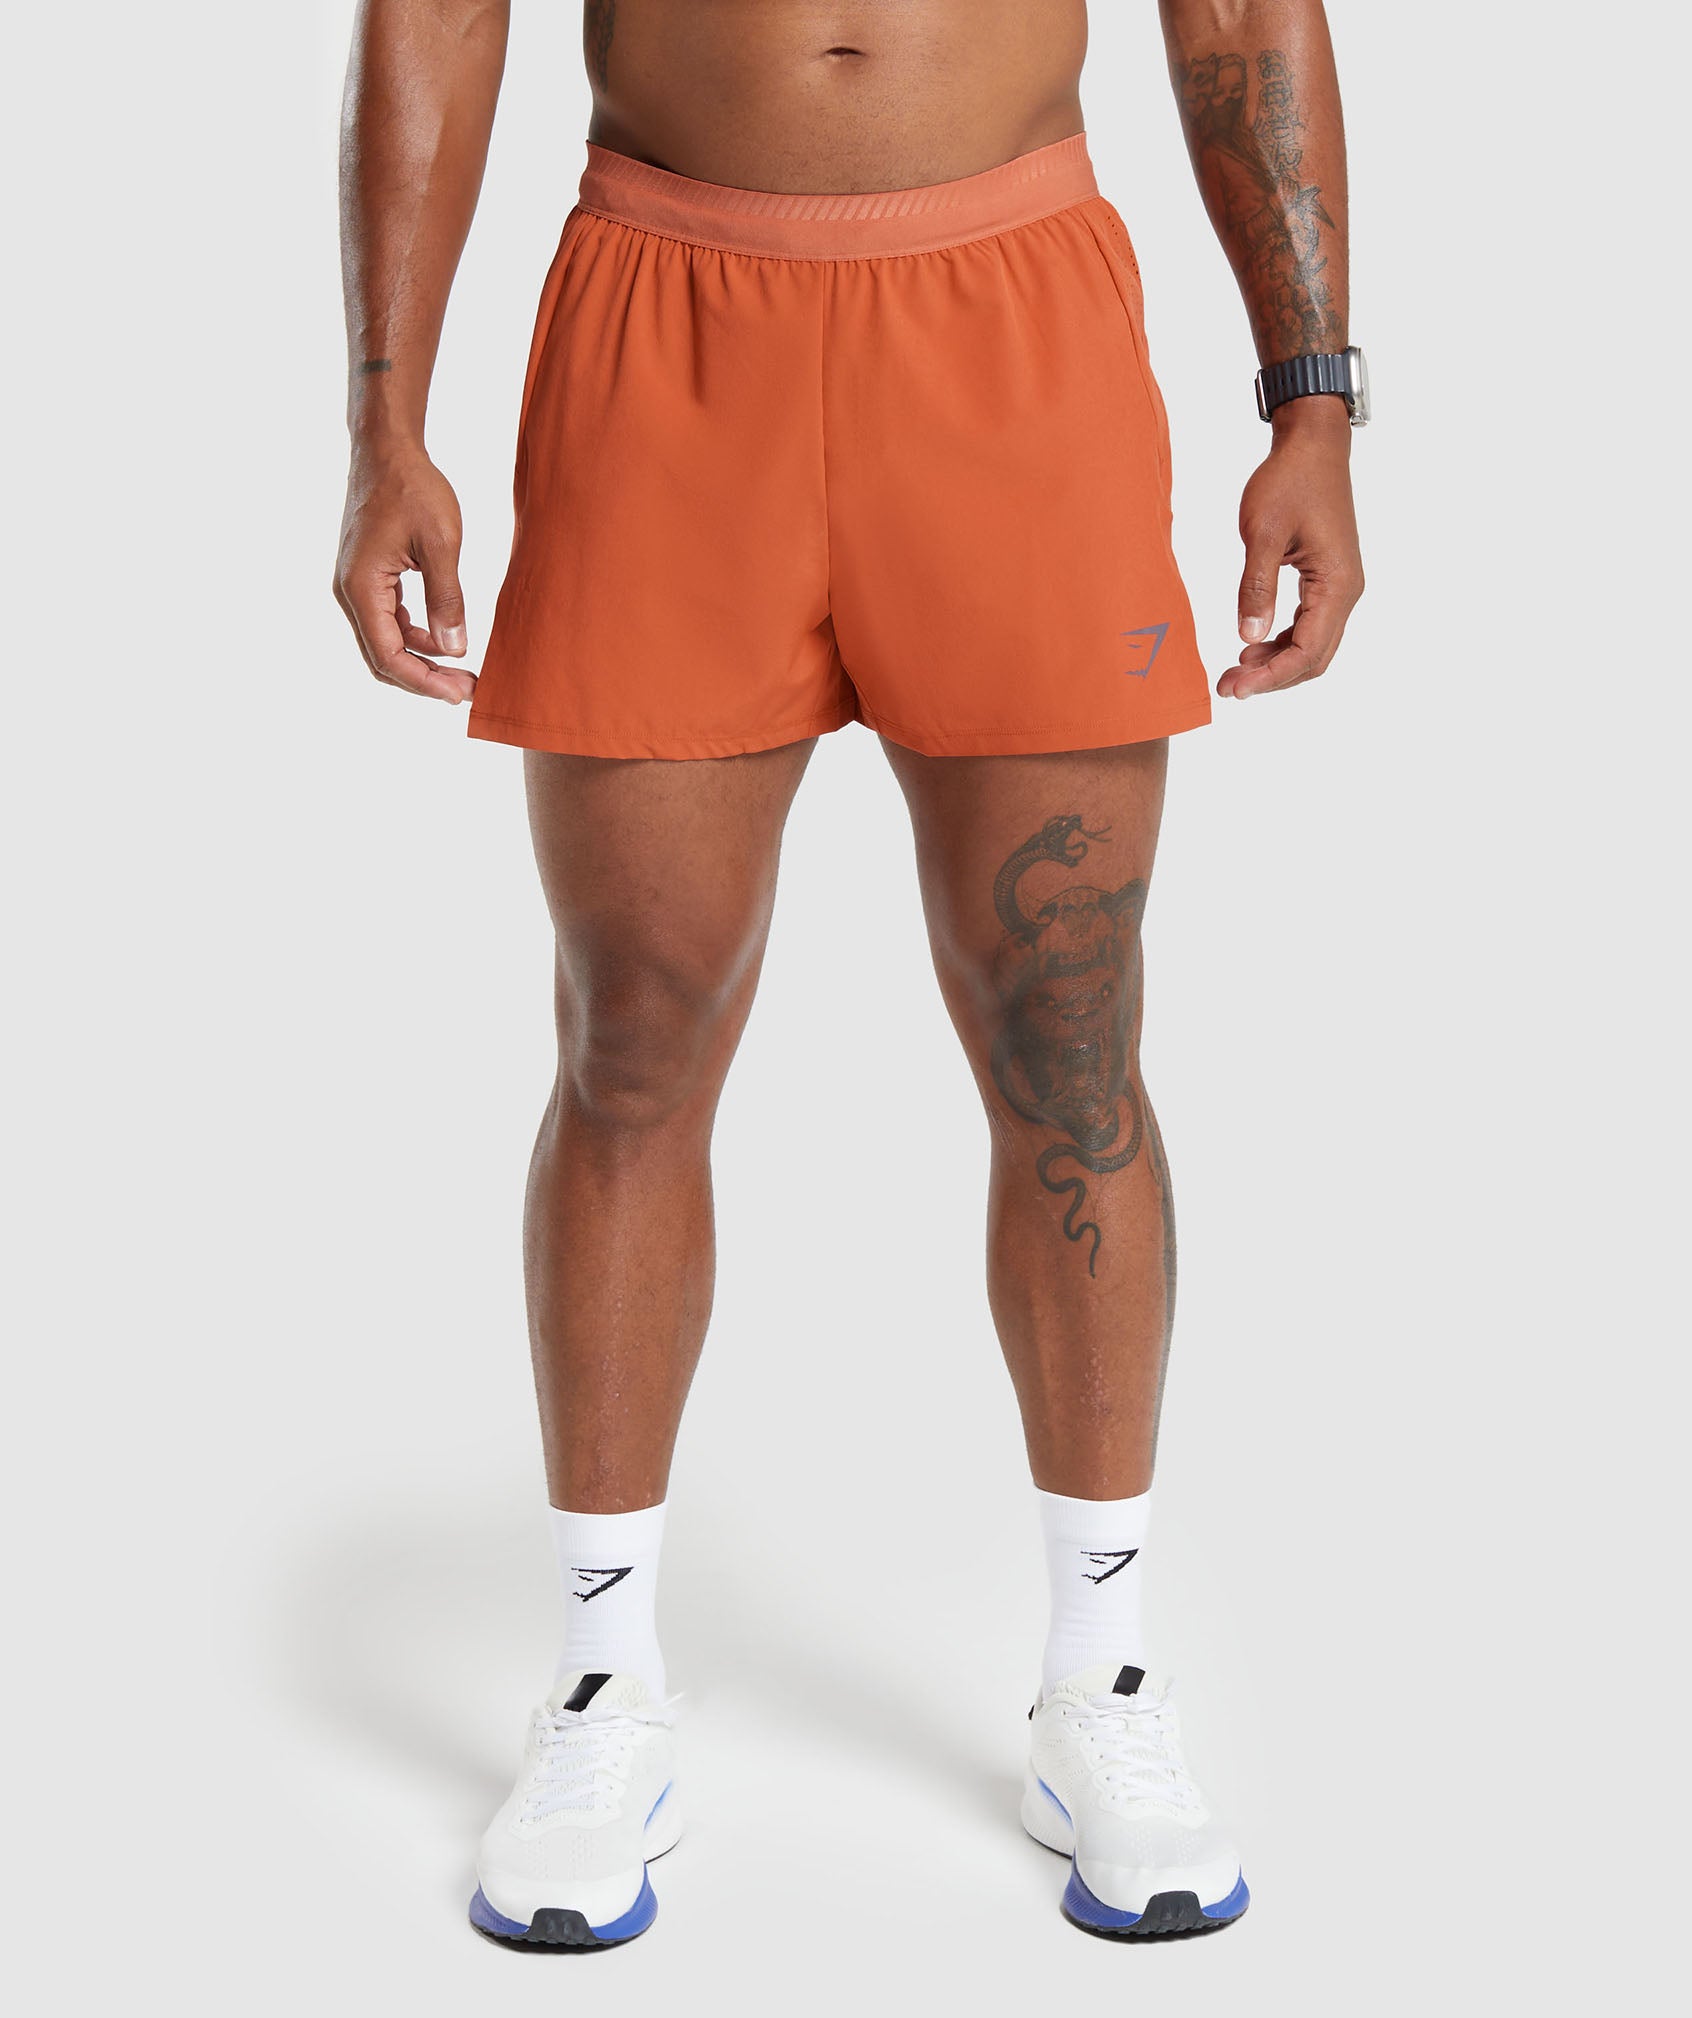 Gymshark Apex Run 4 Shorts - Rust Orange